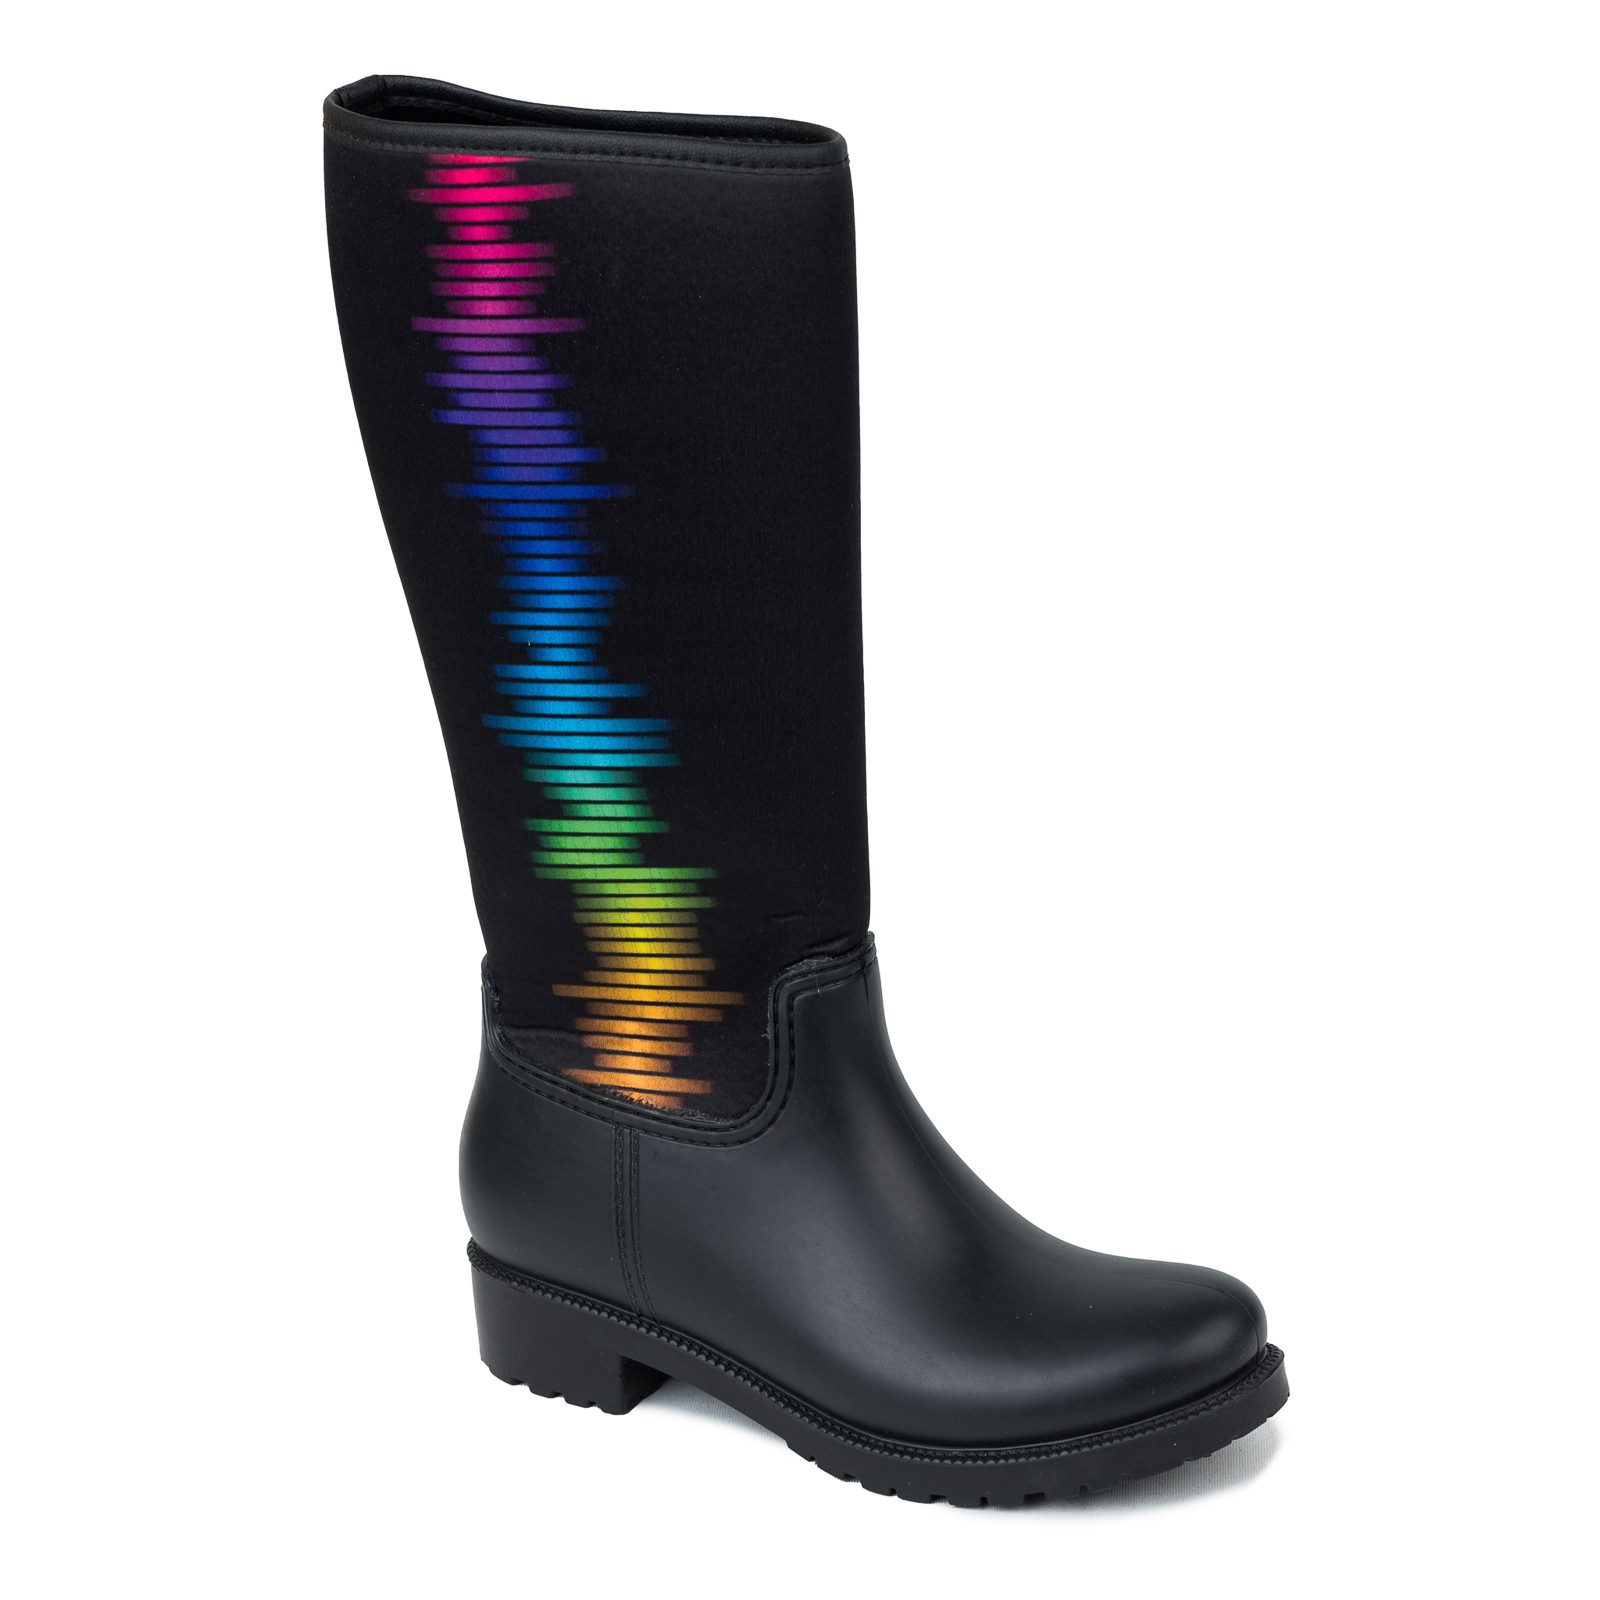 Waterproof boots B579 - BLACK